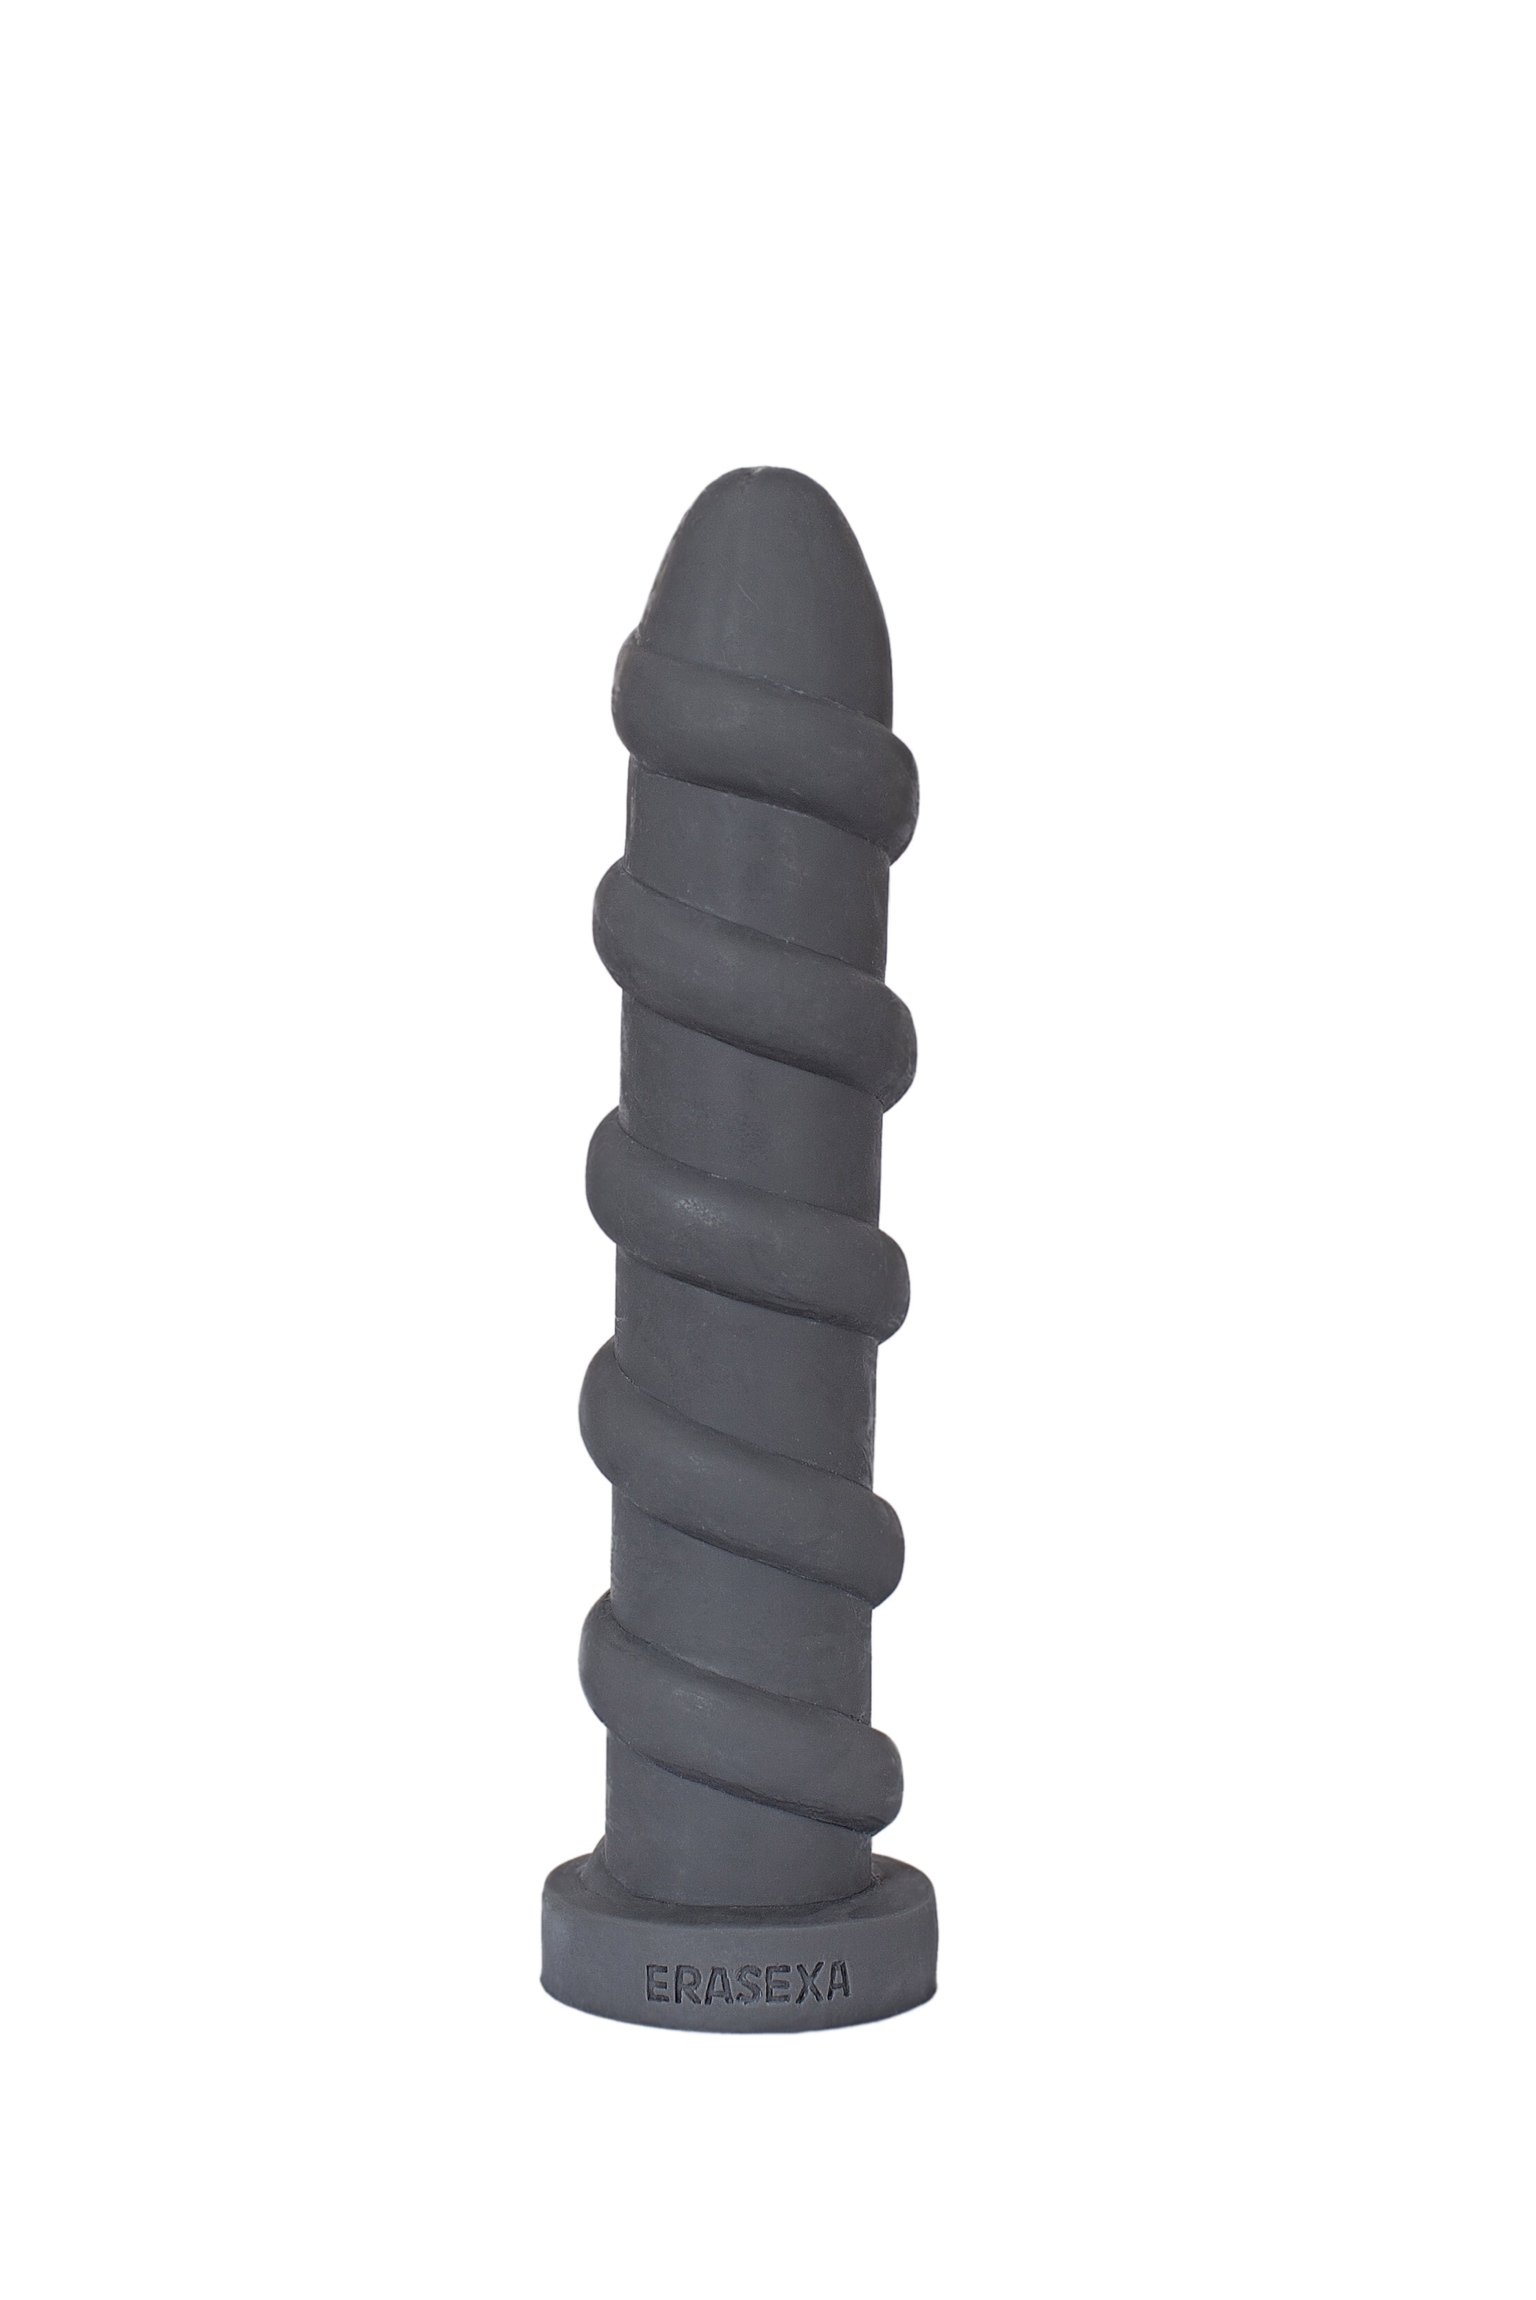 Дилдо Спиралька черного цвета, Erasexa, 31 см